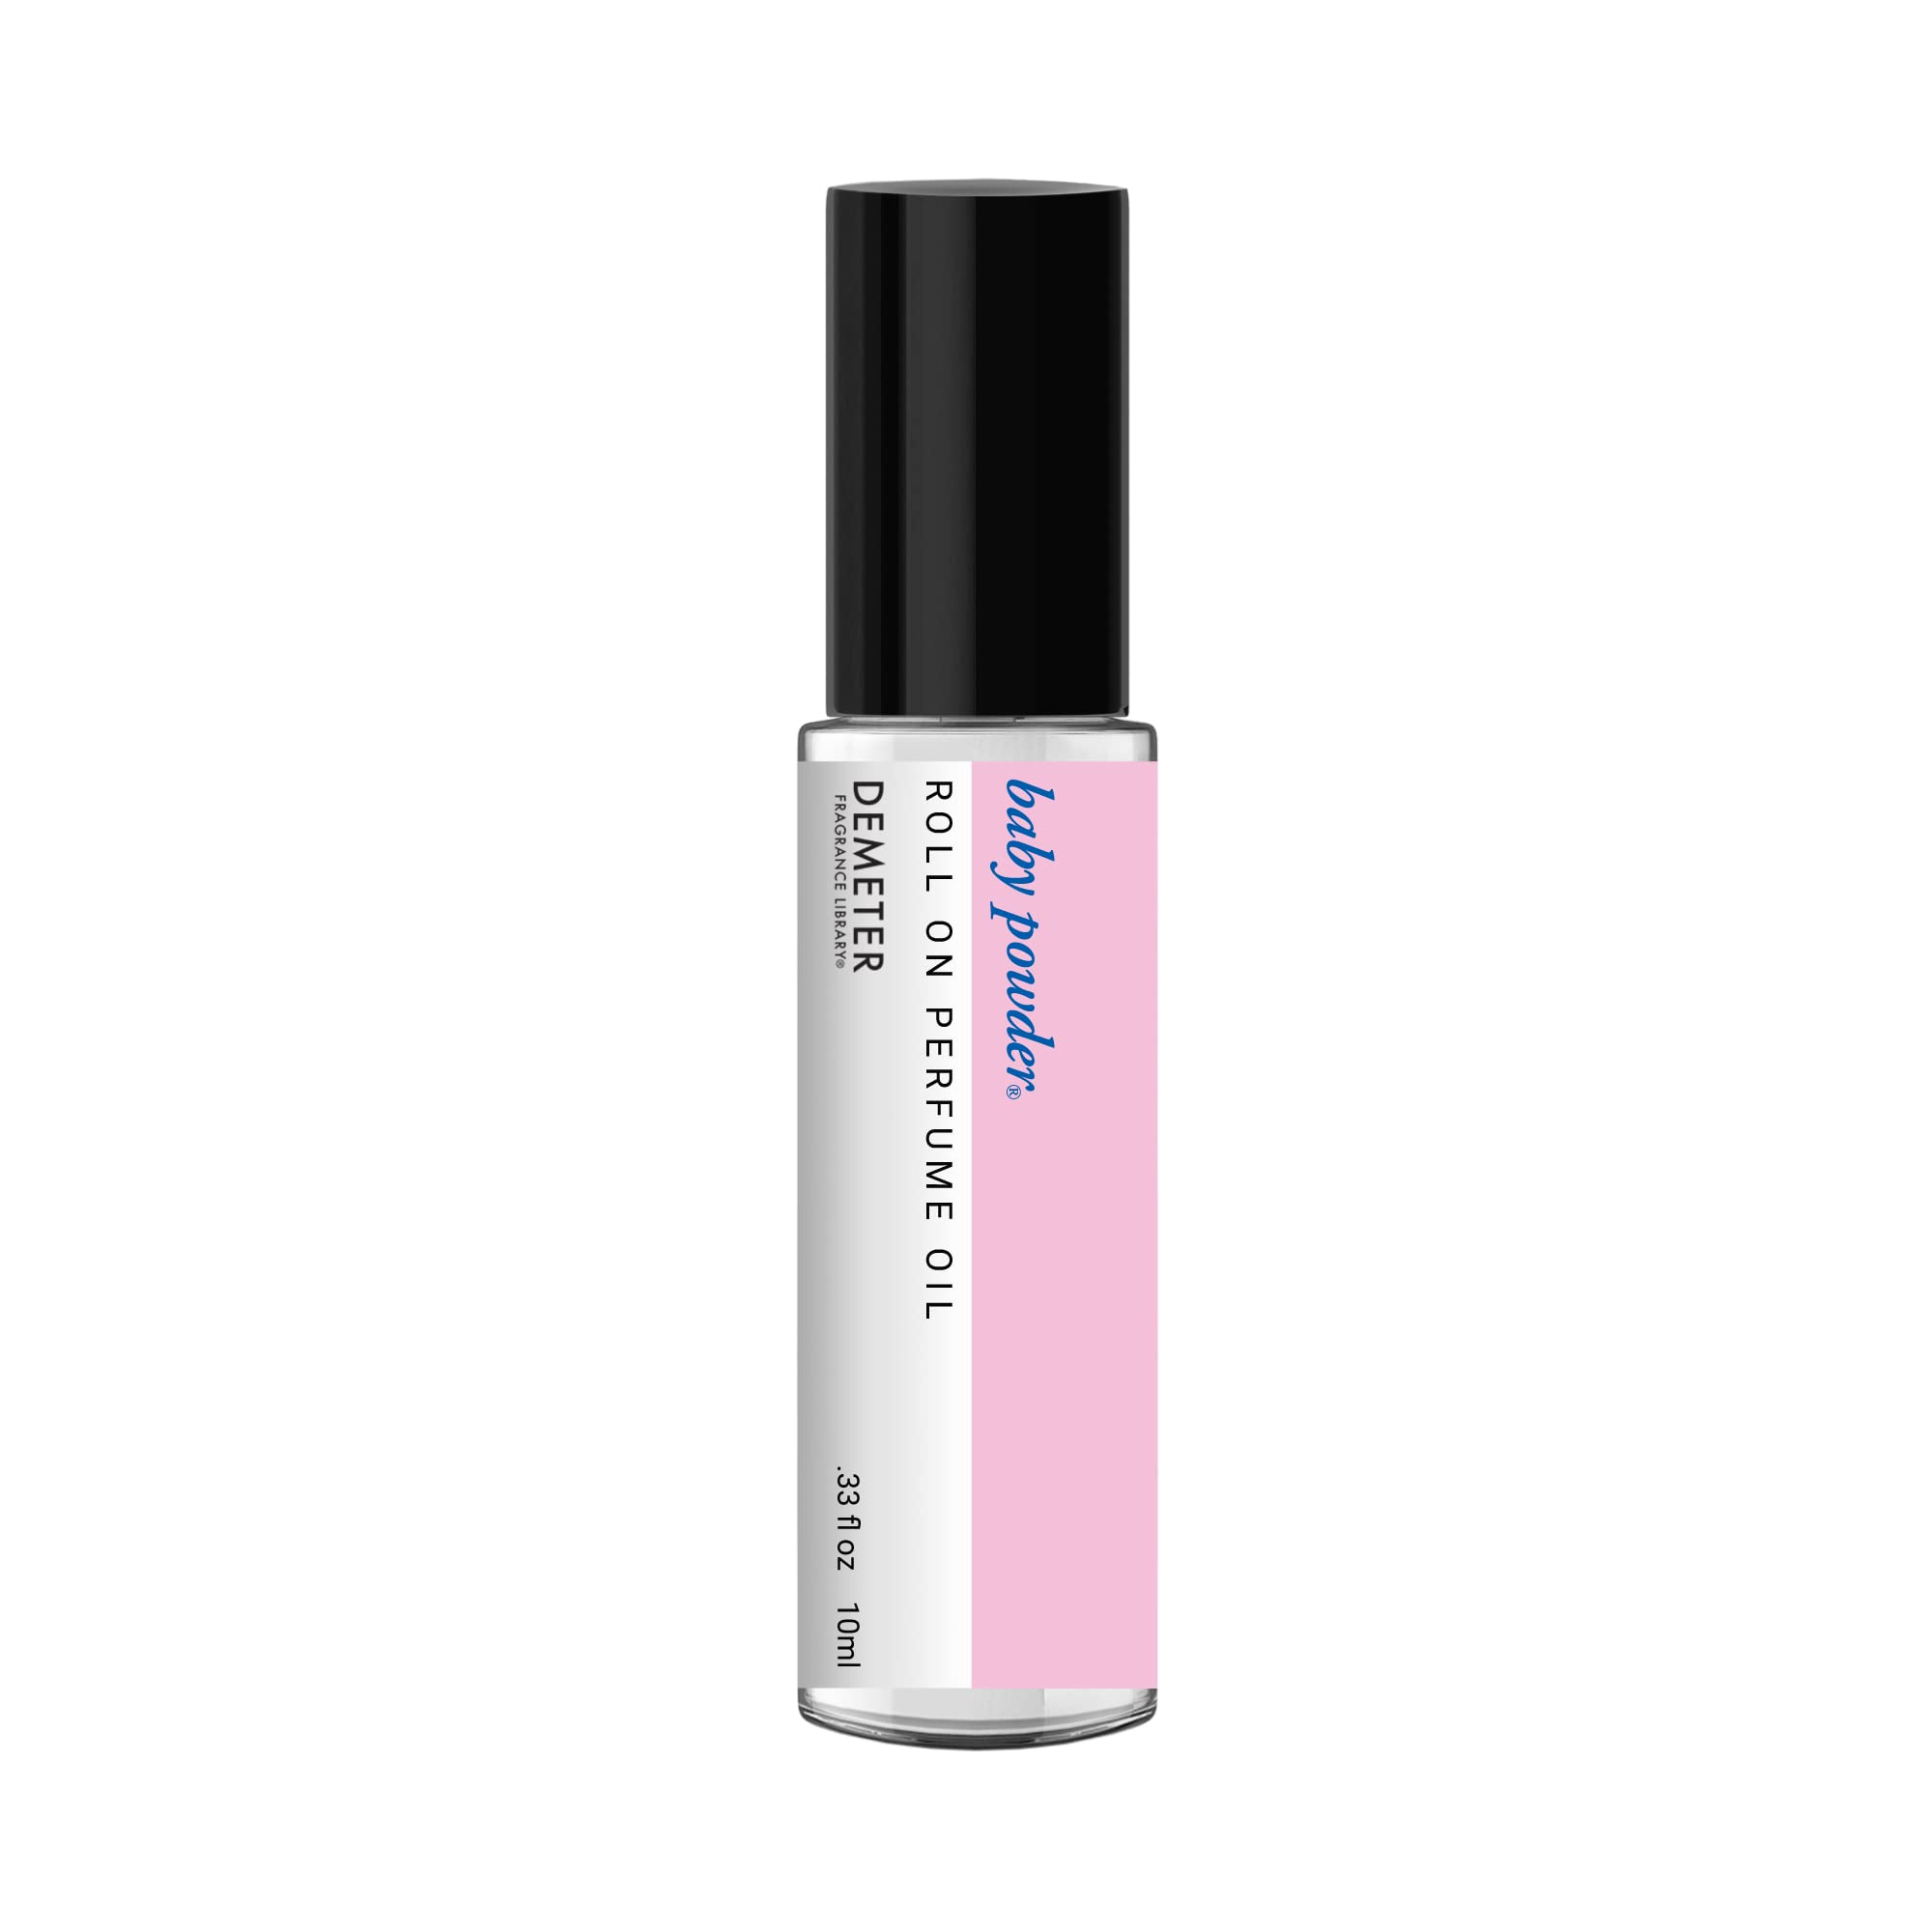 DEMETER Fragrance's Baby Powder Cologne Spray - 1oz - Perfume for Women